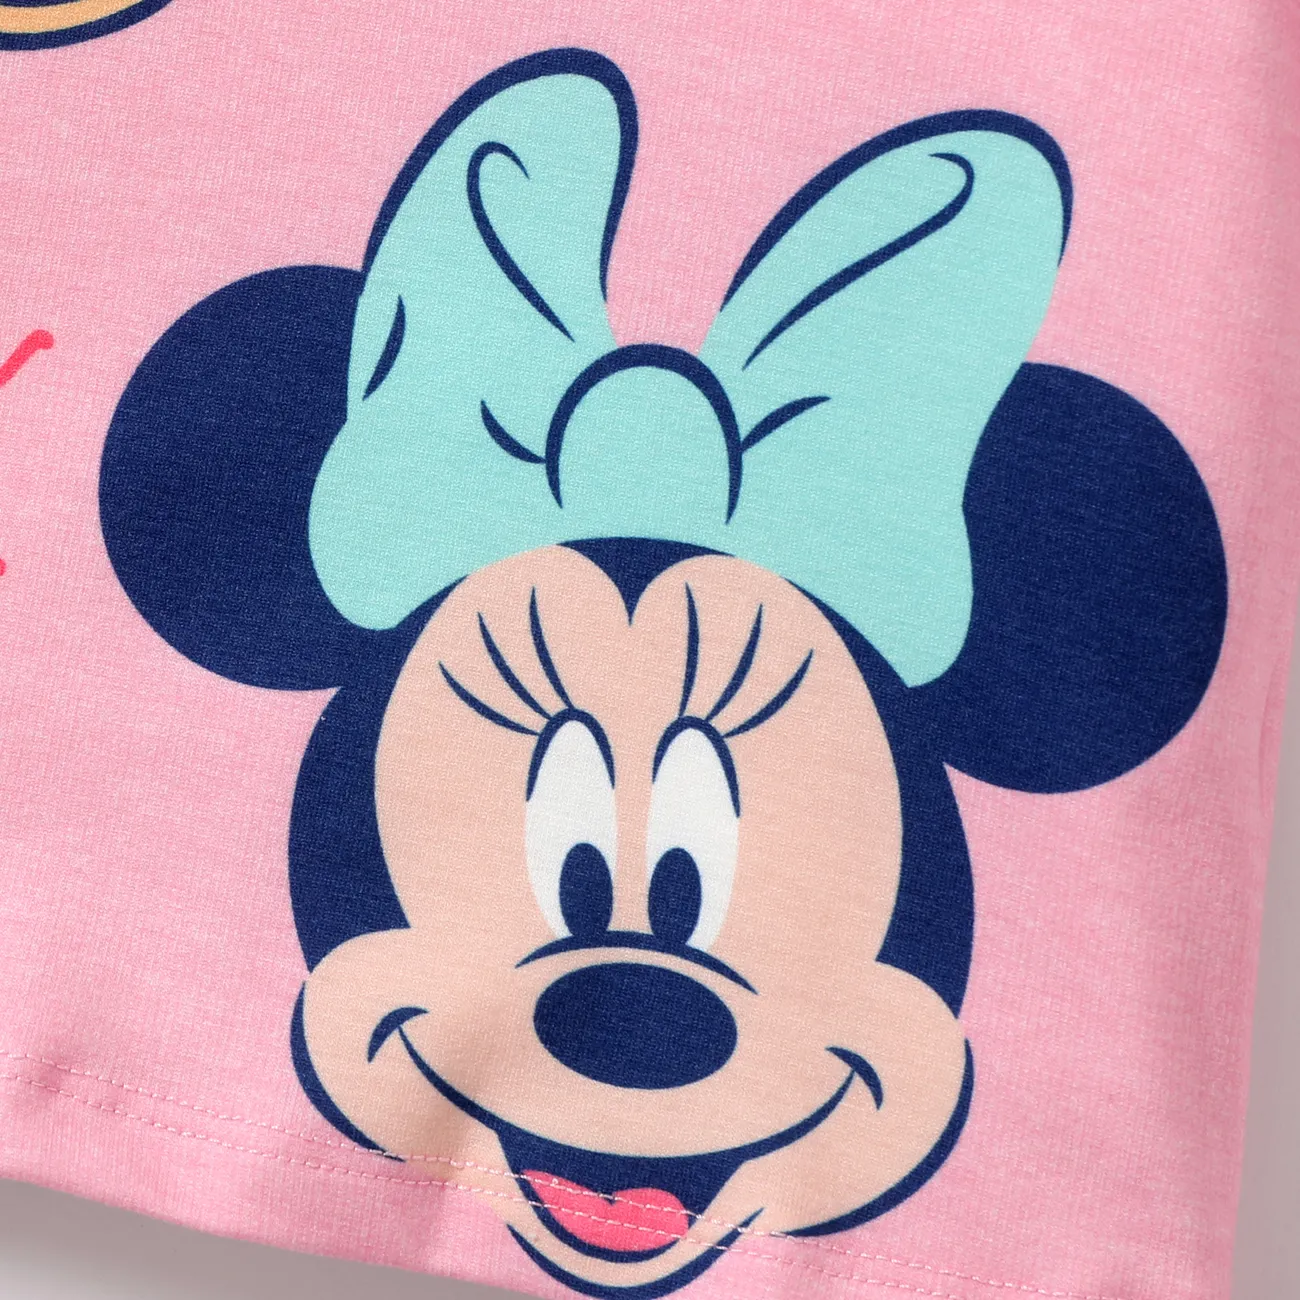 Disney Mickey and Friends Pascua Niño pequeño Chica Infantil Manga corta Camiseta Rosado big image 1